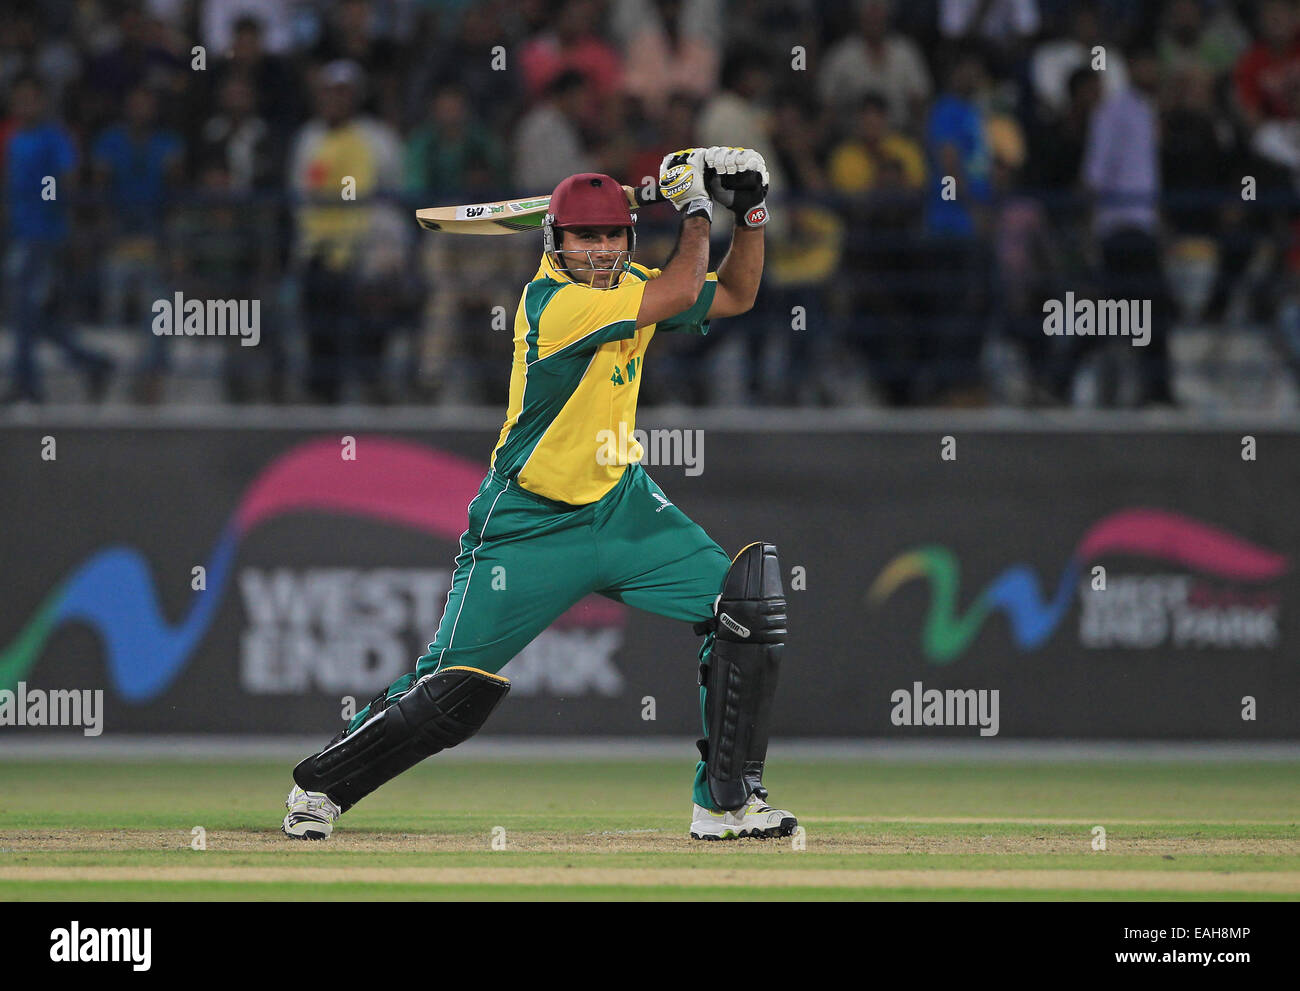 Cricket - Abdul Razzaq of the Asia XI bats during the match between a World XI & an Asia XI in Doha, Qatar Stock Photo